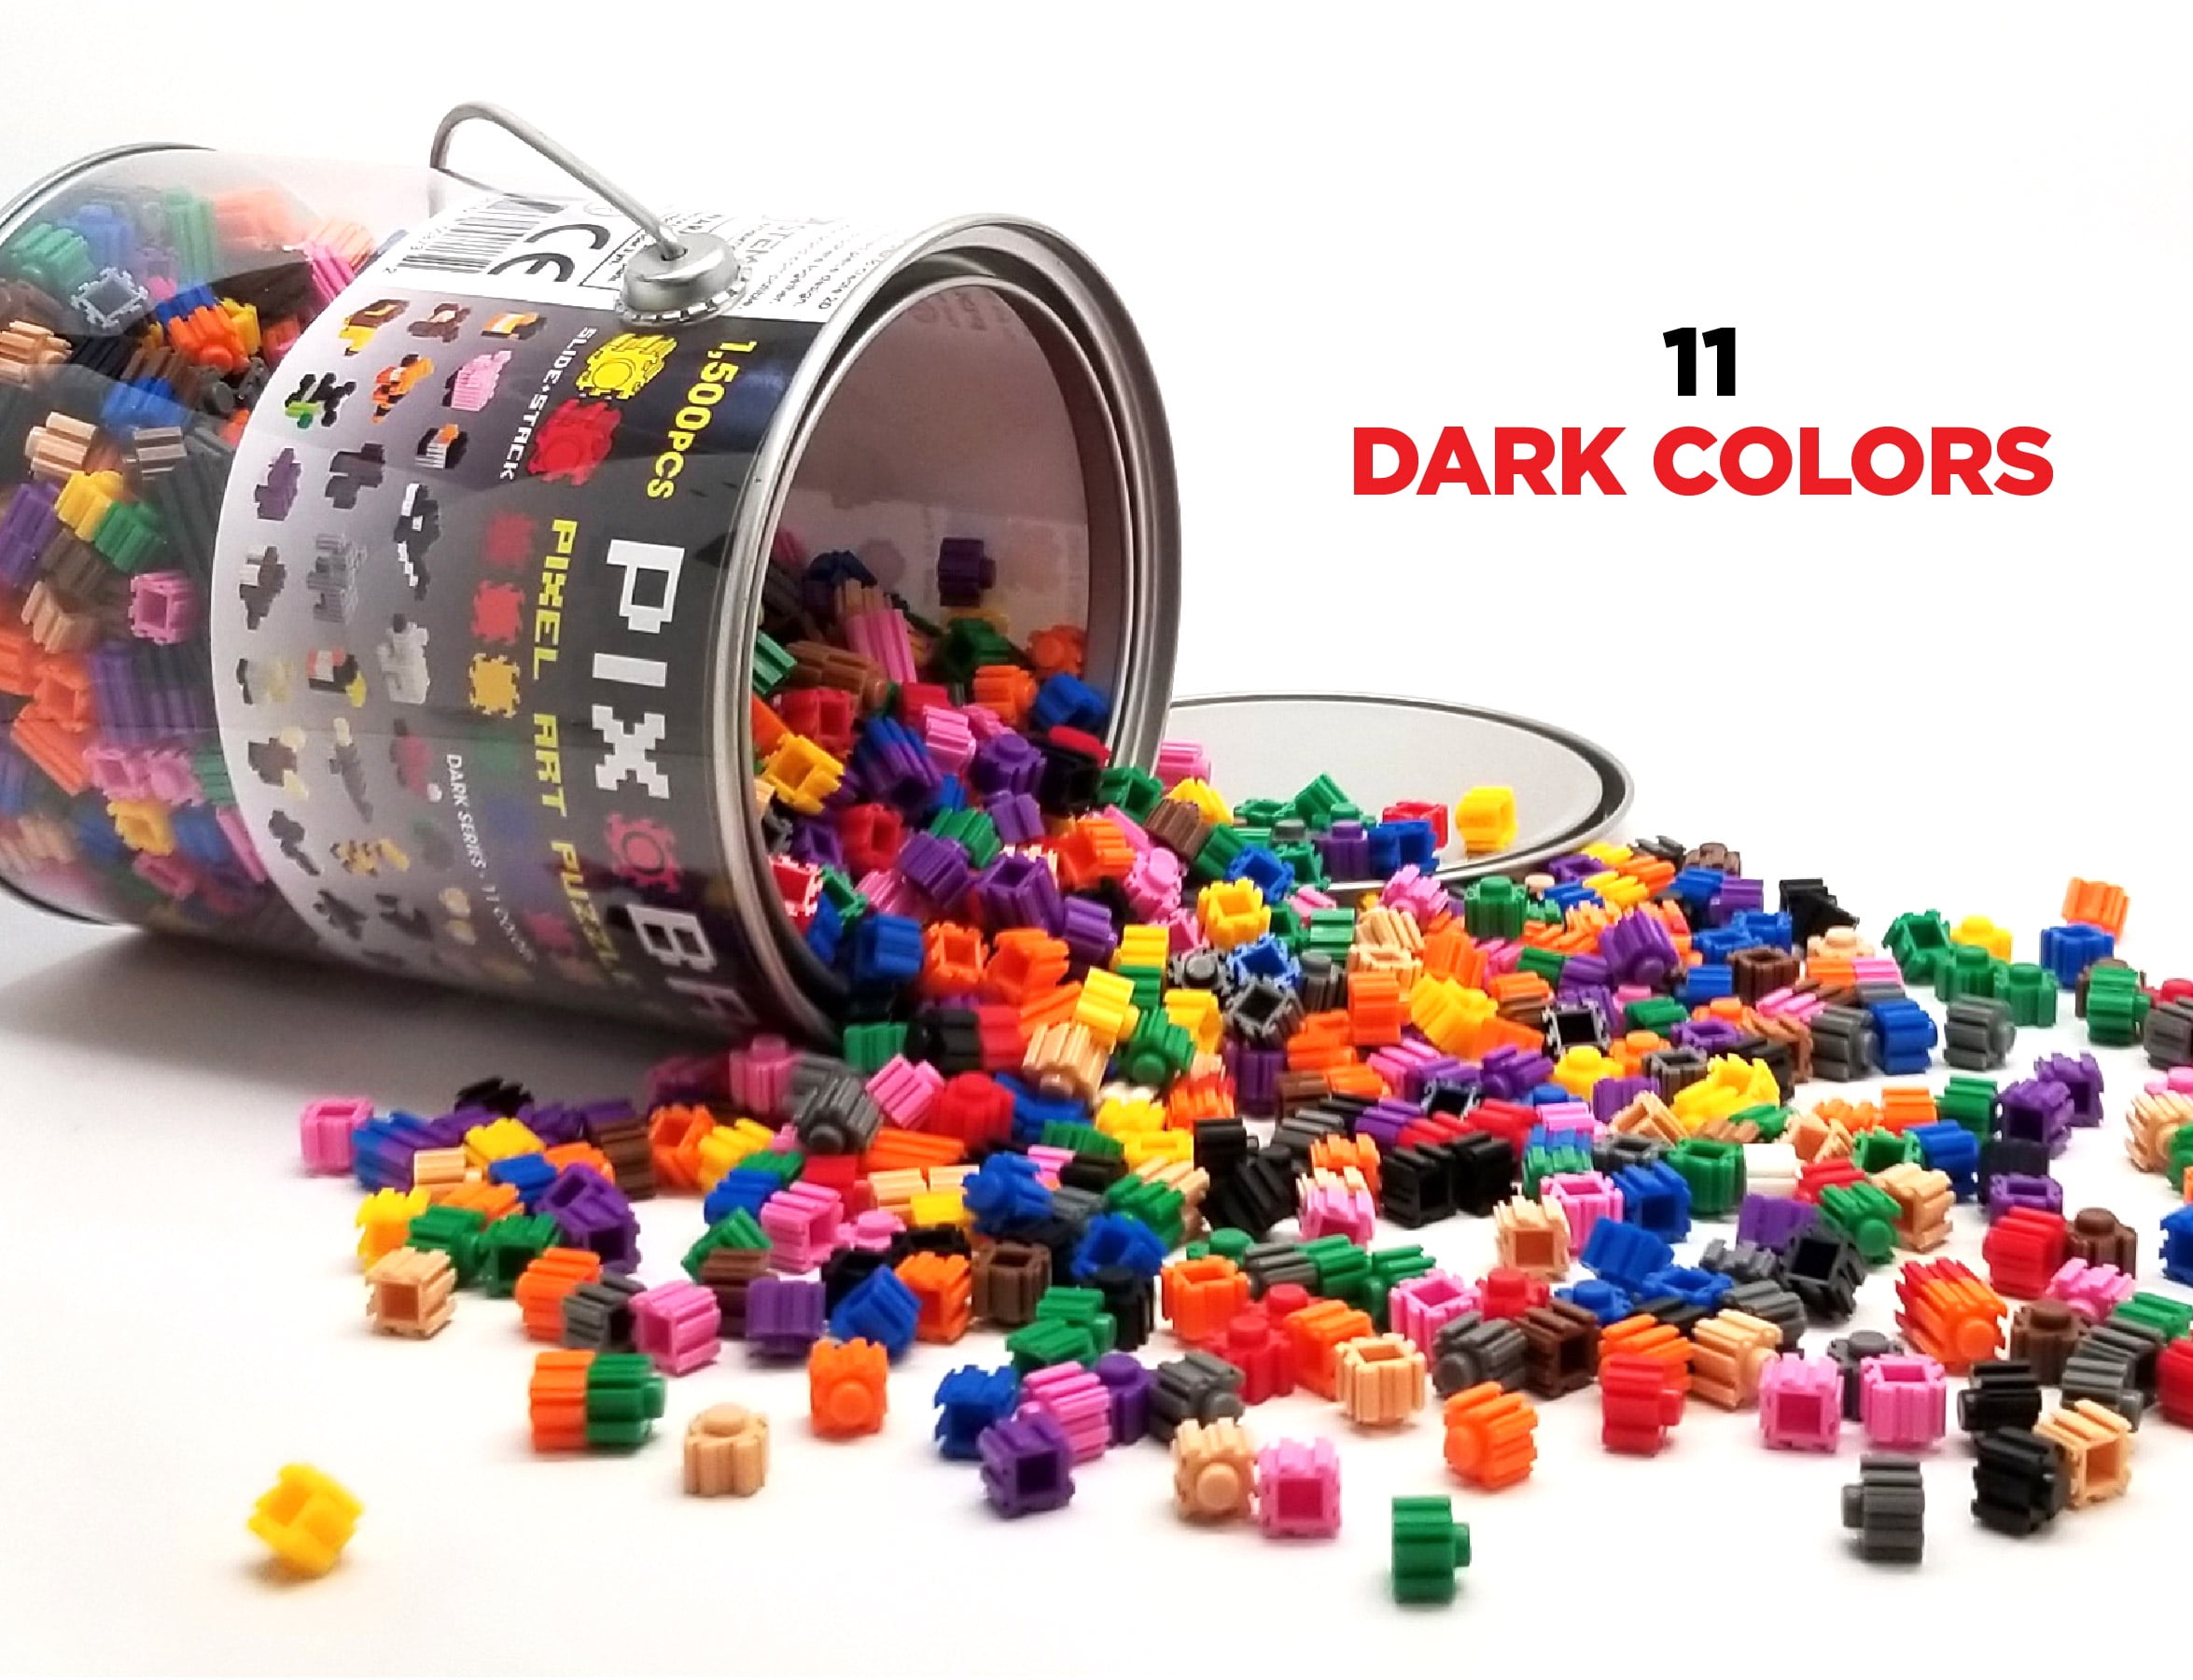  Pix Brix Pixel Art Puzzle Bricks – 6,000 Piece Pixel Art  Container, 12 Color Dark Palette – Interlocking Building Bricks, Create 2D  and 3D Builds Without Water or Glue – Stem